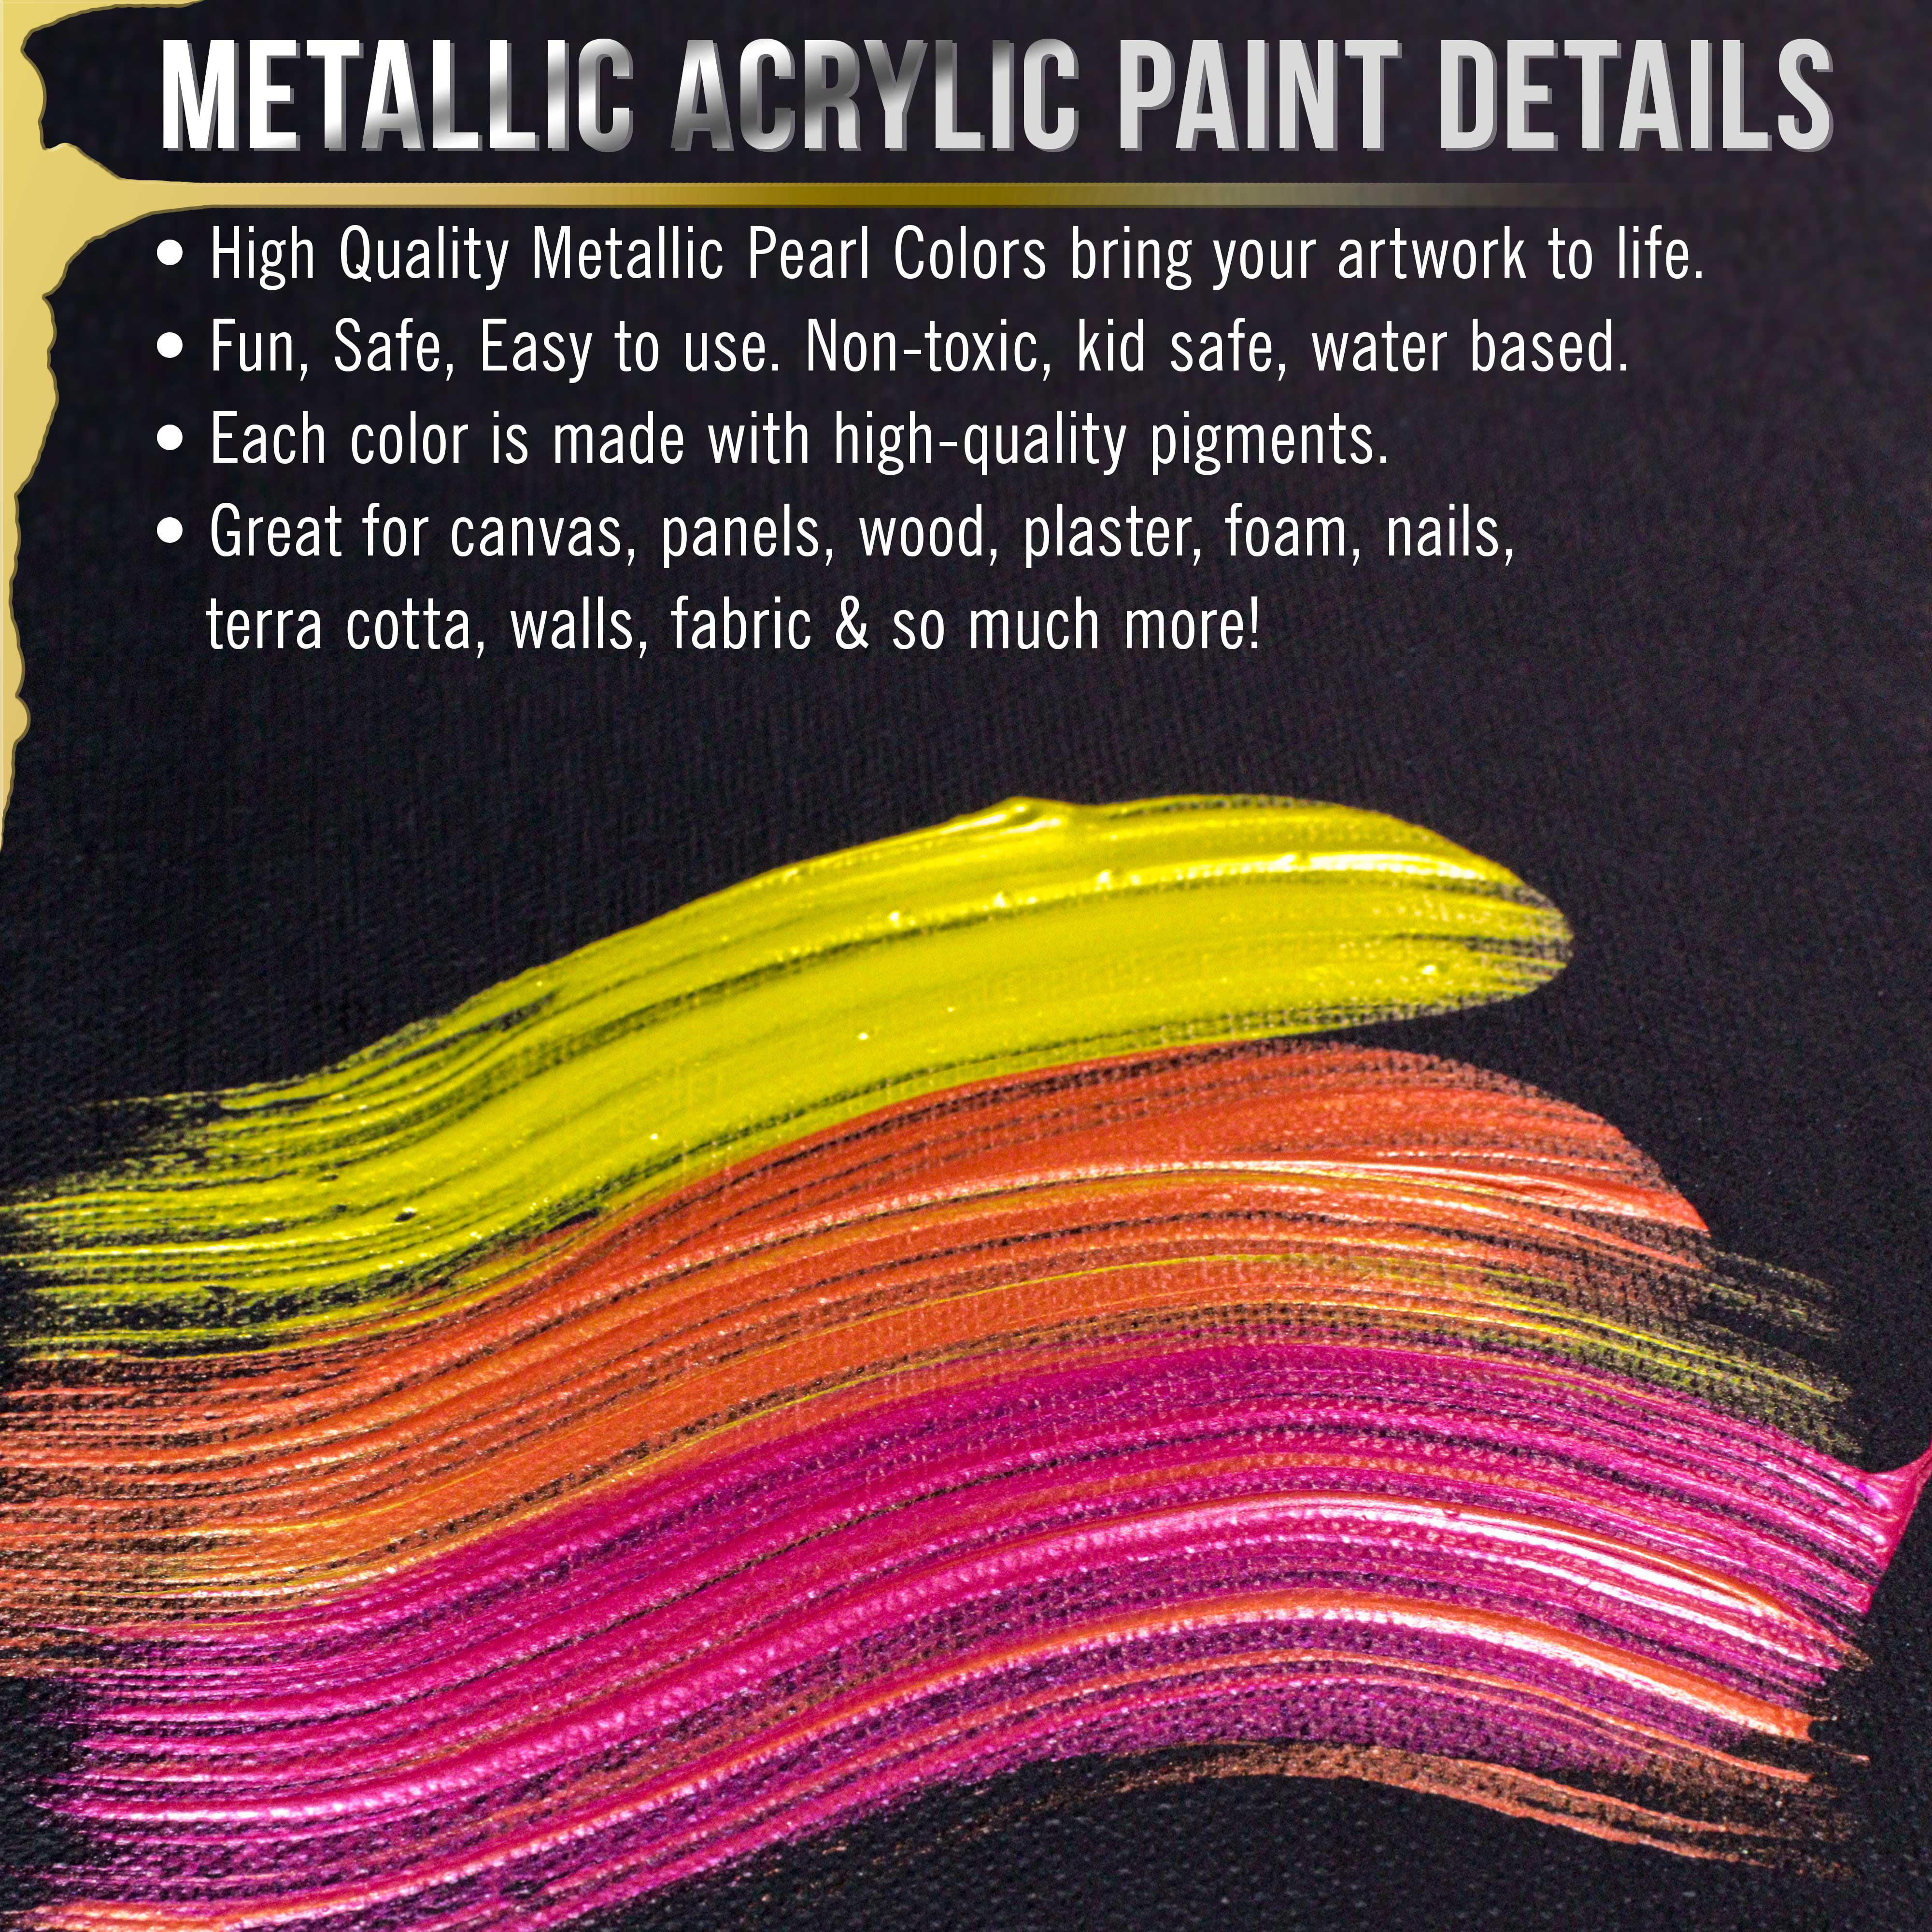 ARTIFY Premium Heavy Body Acrylic Paint Set, 36 Colors (1.29 oz, 38ml) with A Storage Box, Rich Pigments, Metallic Paints, Non-Fading, Non-Toxic